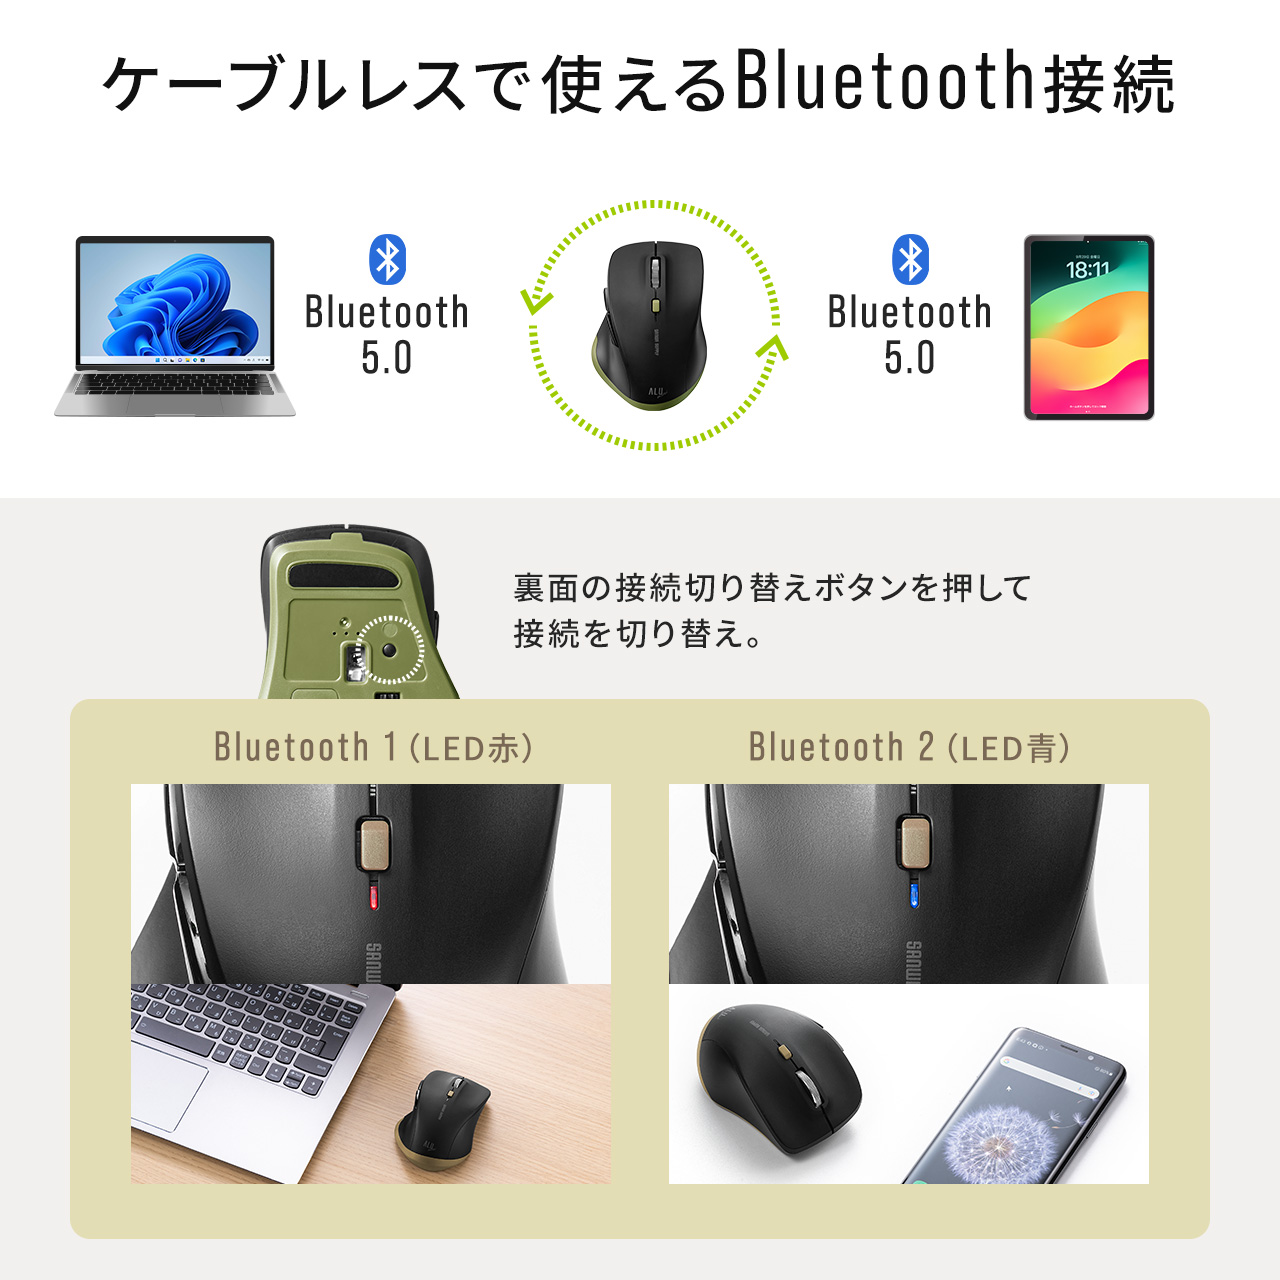 Bluetoothマウス 無線 小型 5ボタン 戻る進む アルミホイール 静音 ALUmini ブラック 400-MABT159BK2